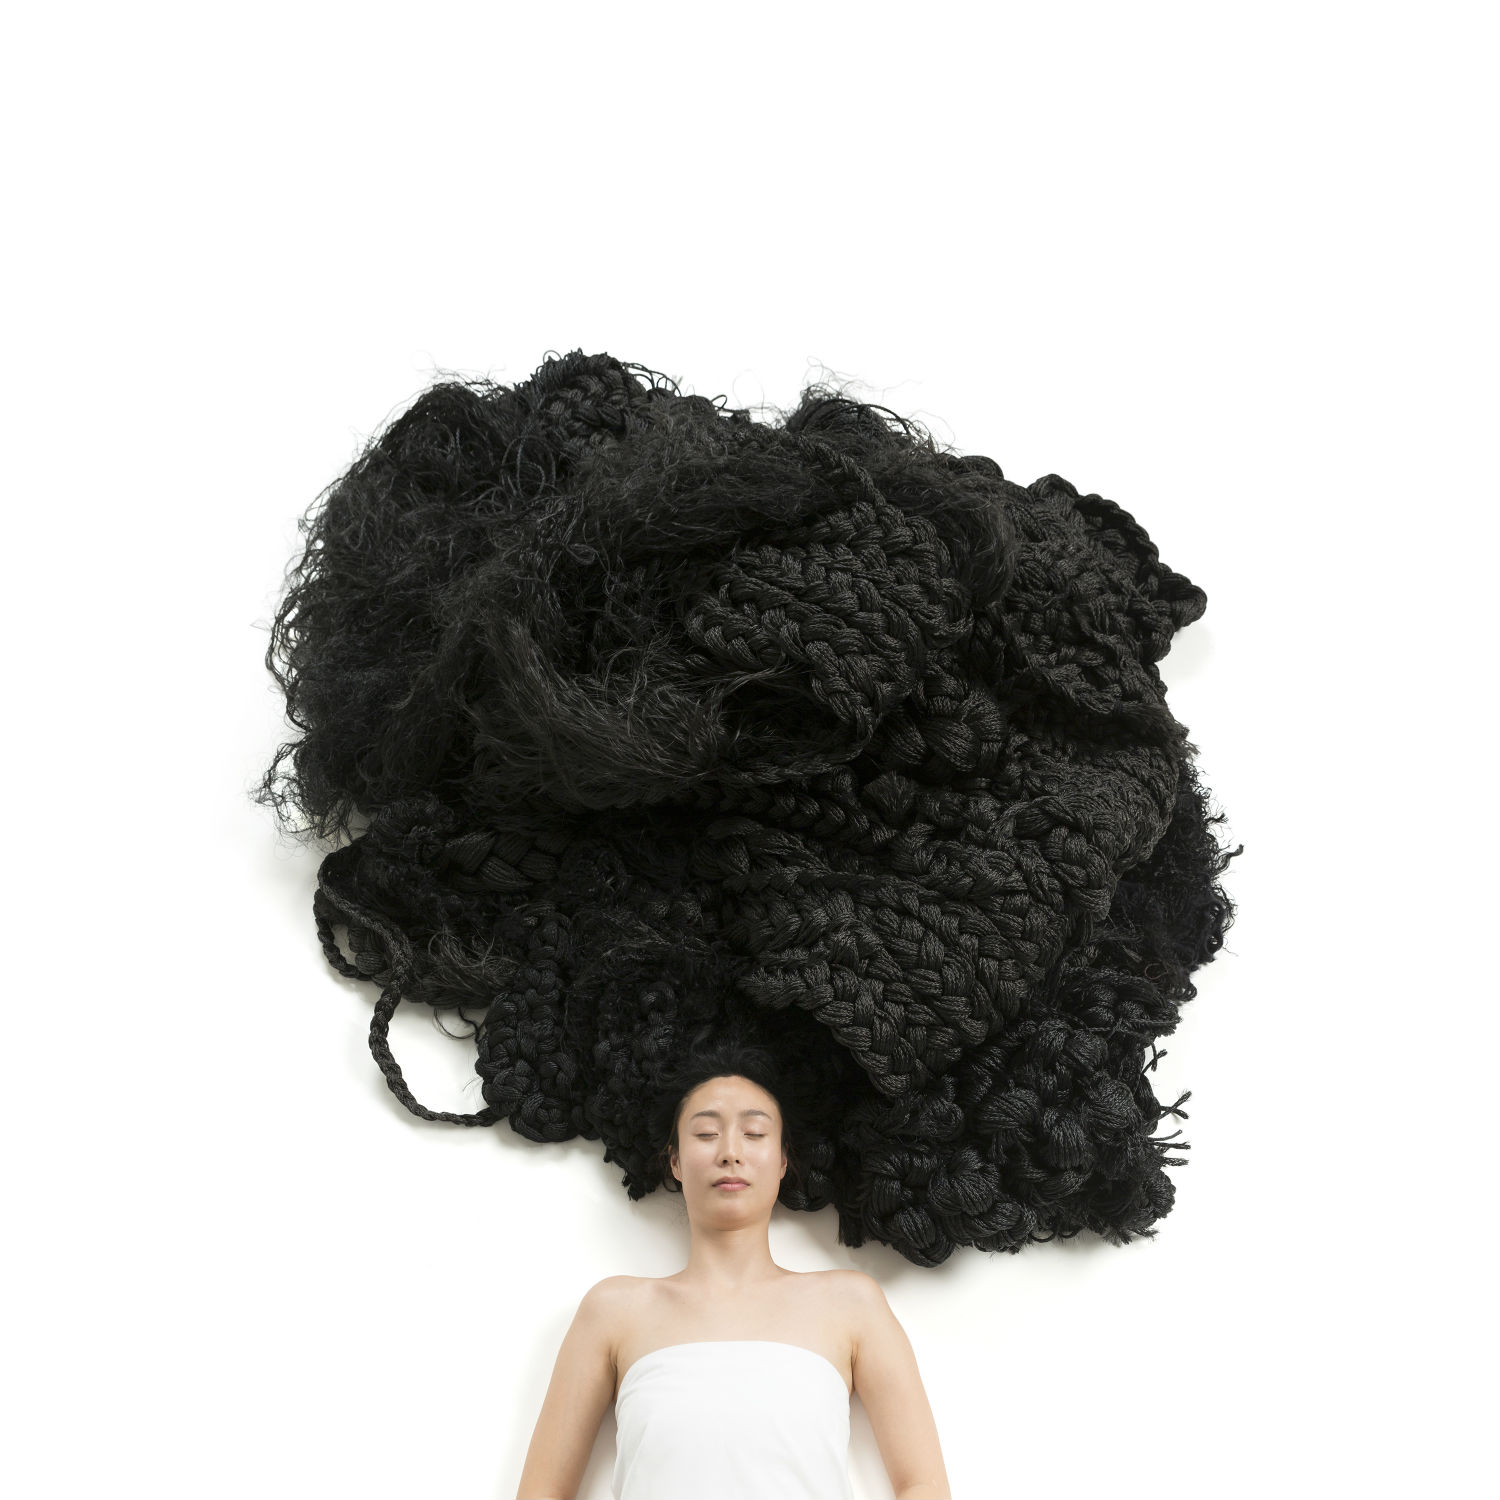 yuni kim lang sculpture hair black surreal white